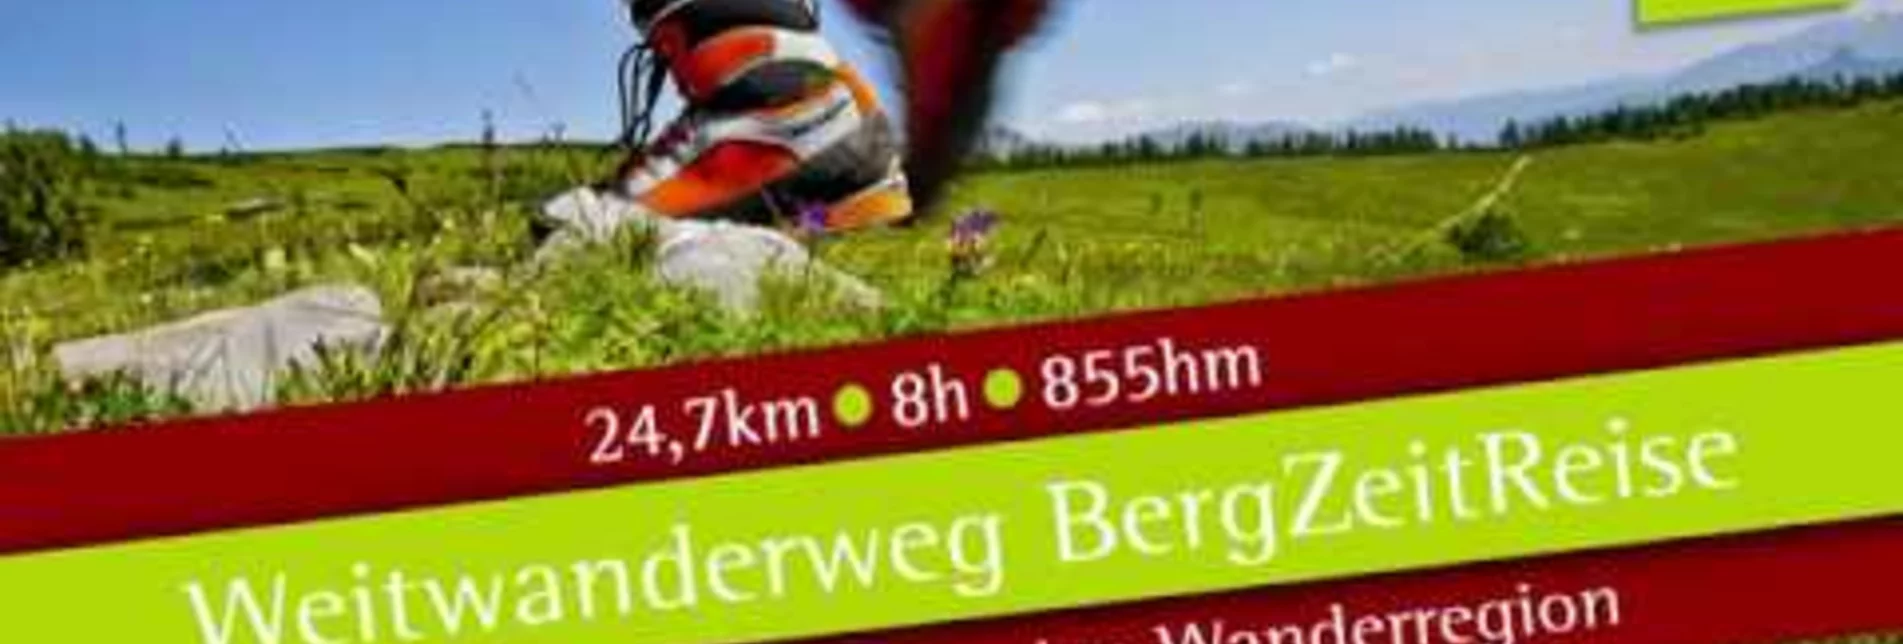 Long-Distance Hiking Etappe 12: BergZeitReise Kindberg - Pogusch - Kapfenberg - Touren-Impression #1